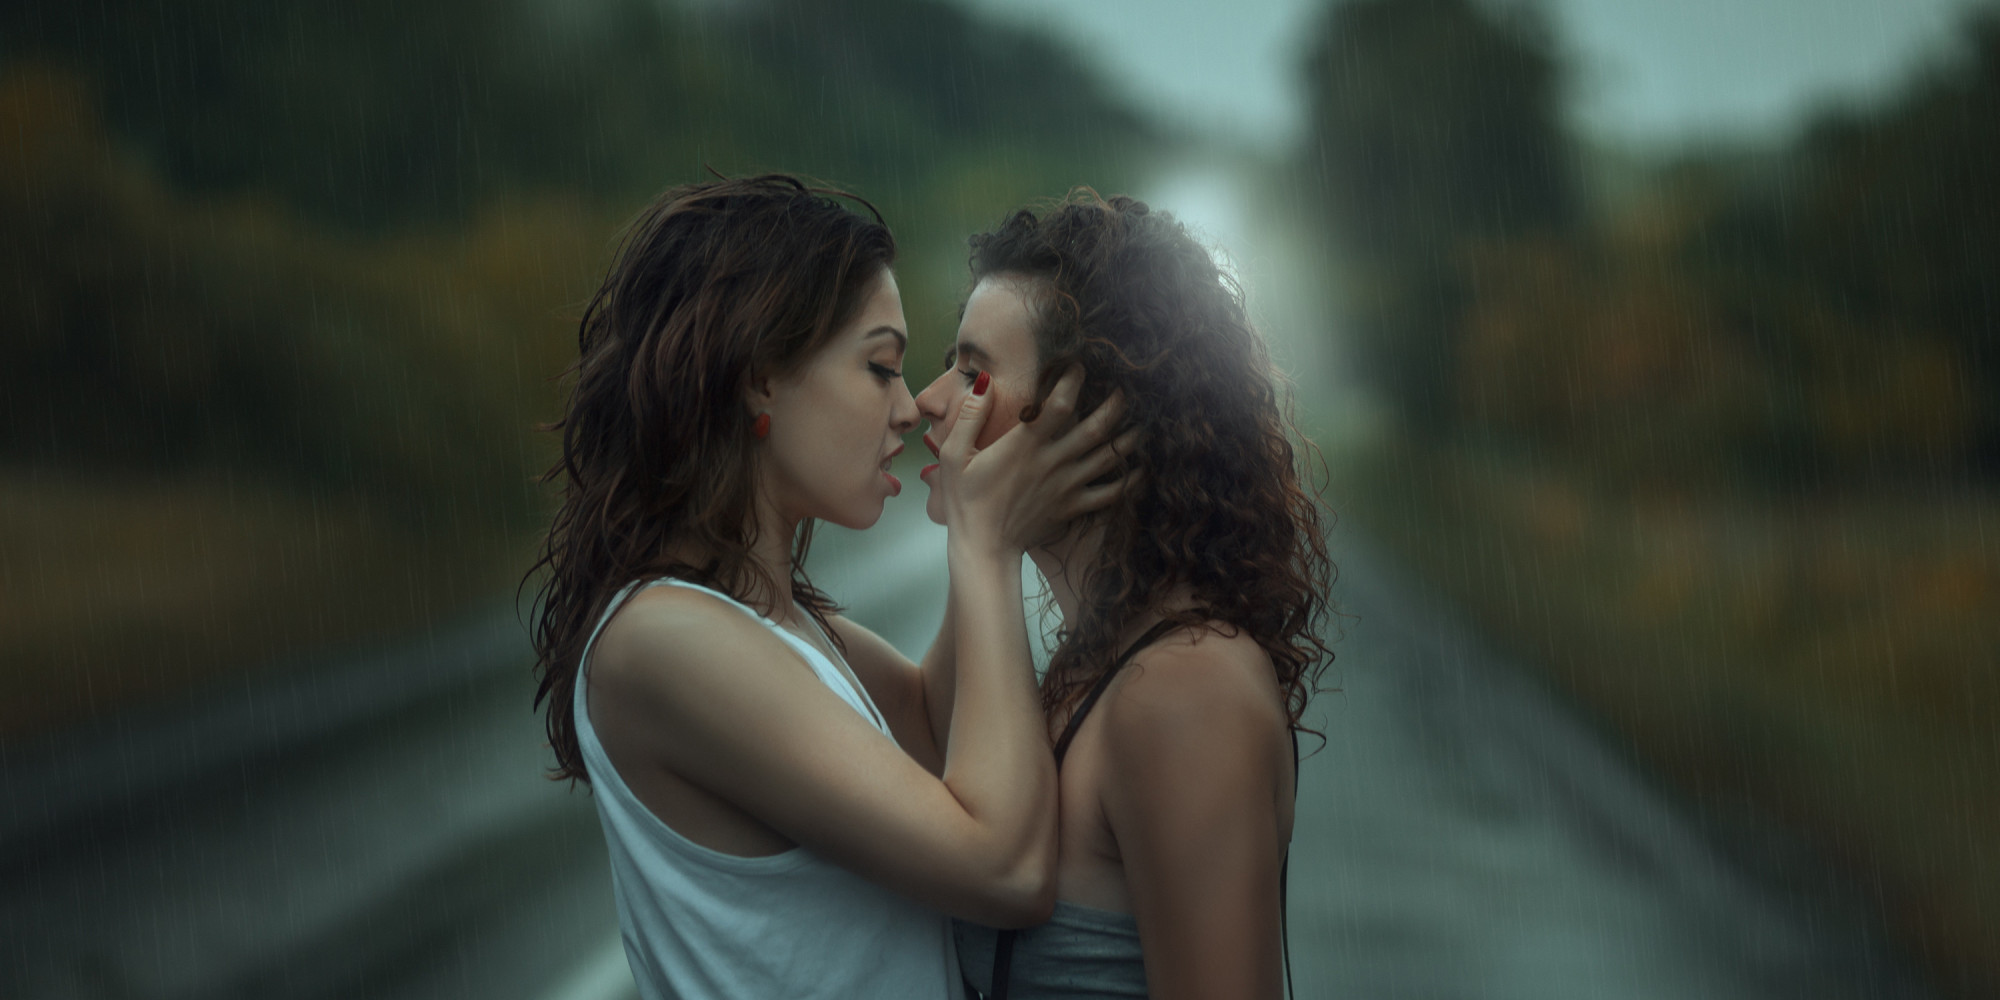 Lesbian streaming. Девушки обнимаются. Поцелуй девушек. Девушки целуются фото.